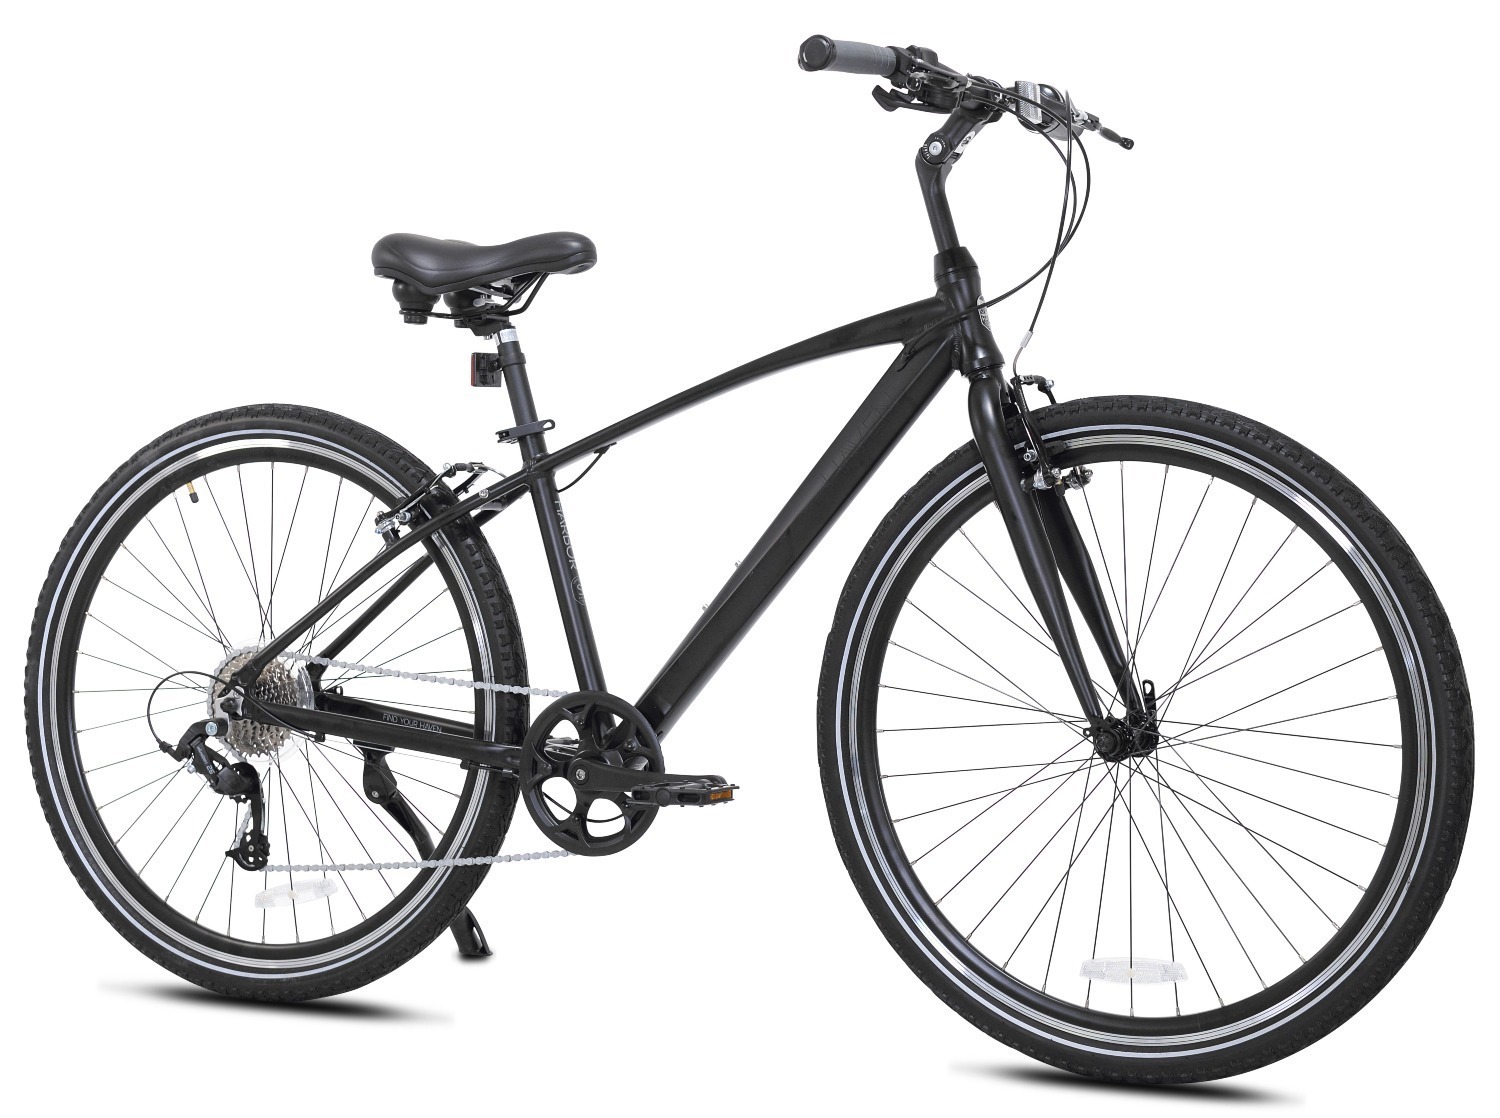 Menham Bikes 700c Haven Harbor 8 Hybrid Bike (Black) $178.20 + Free Shipping